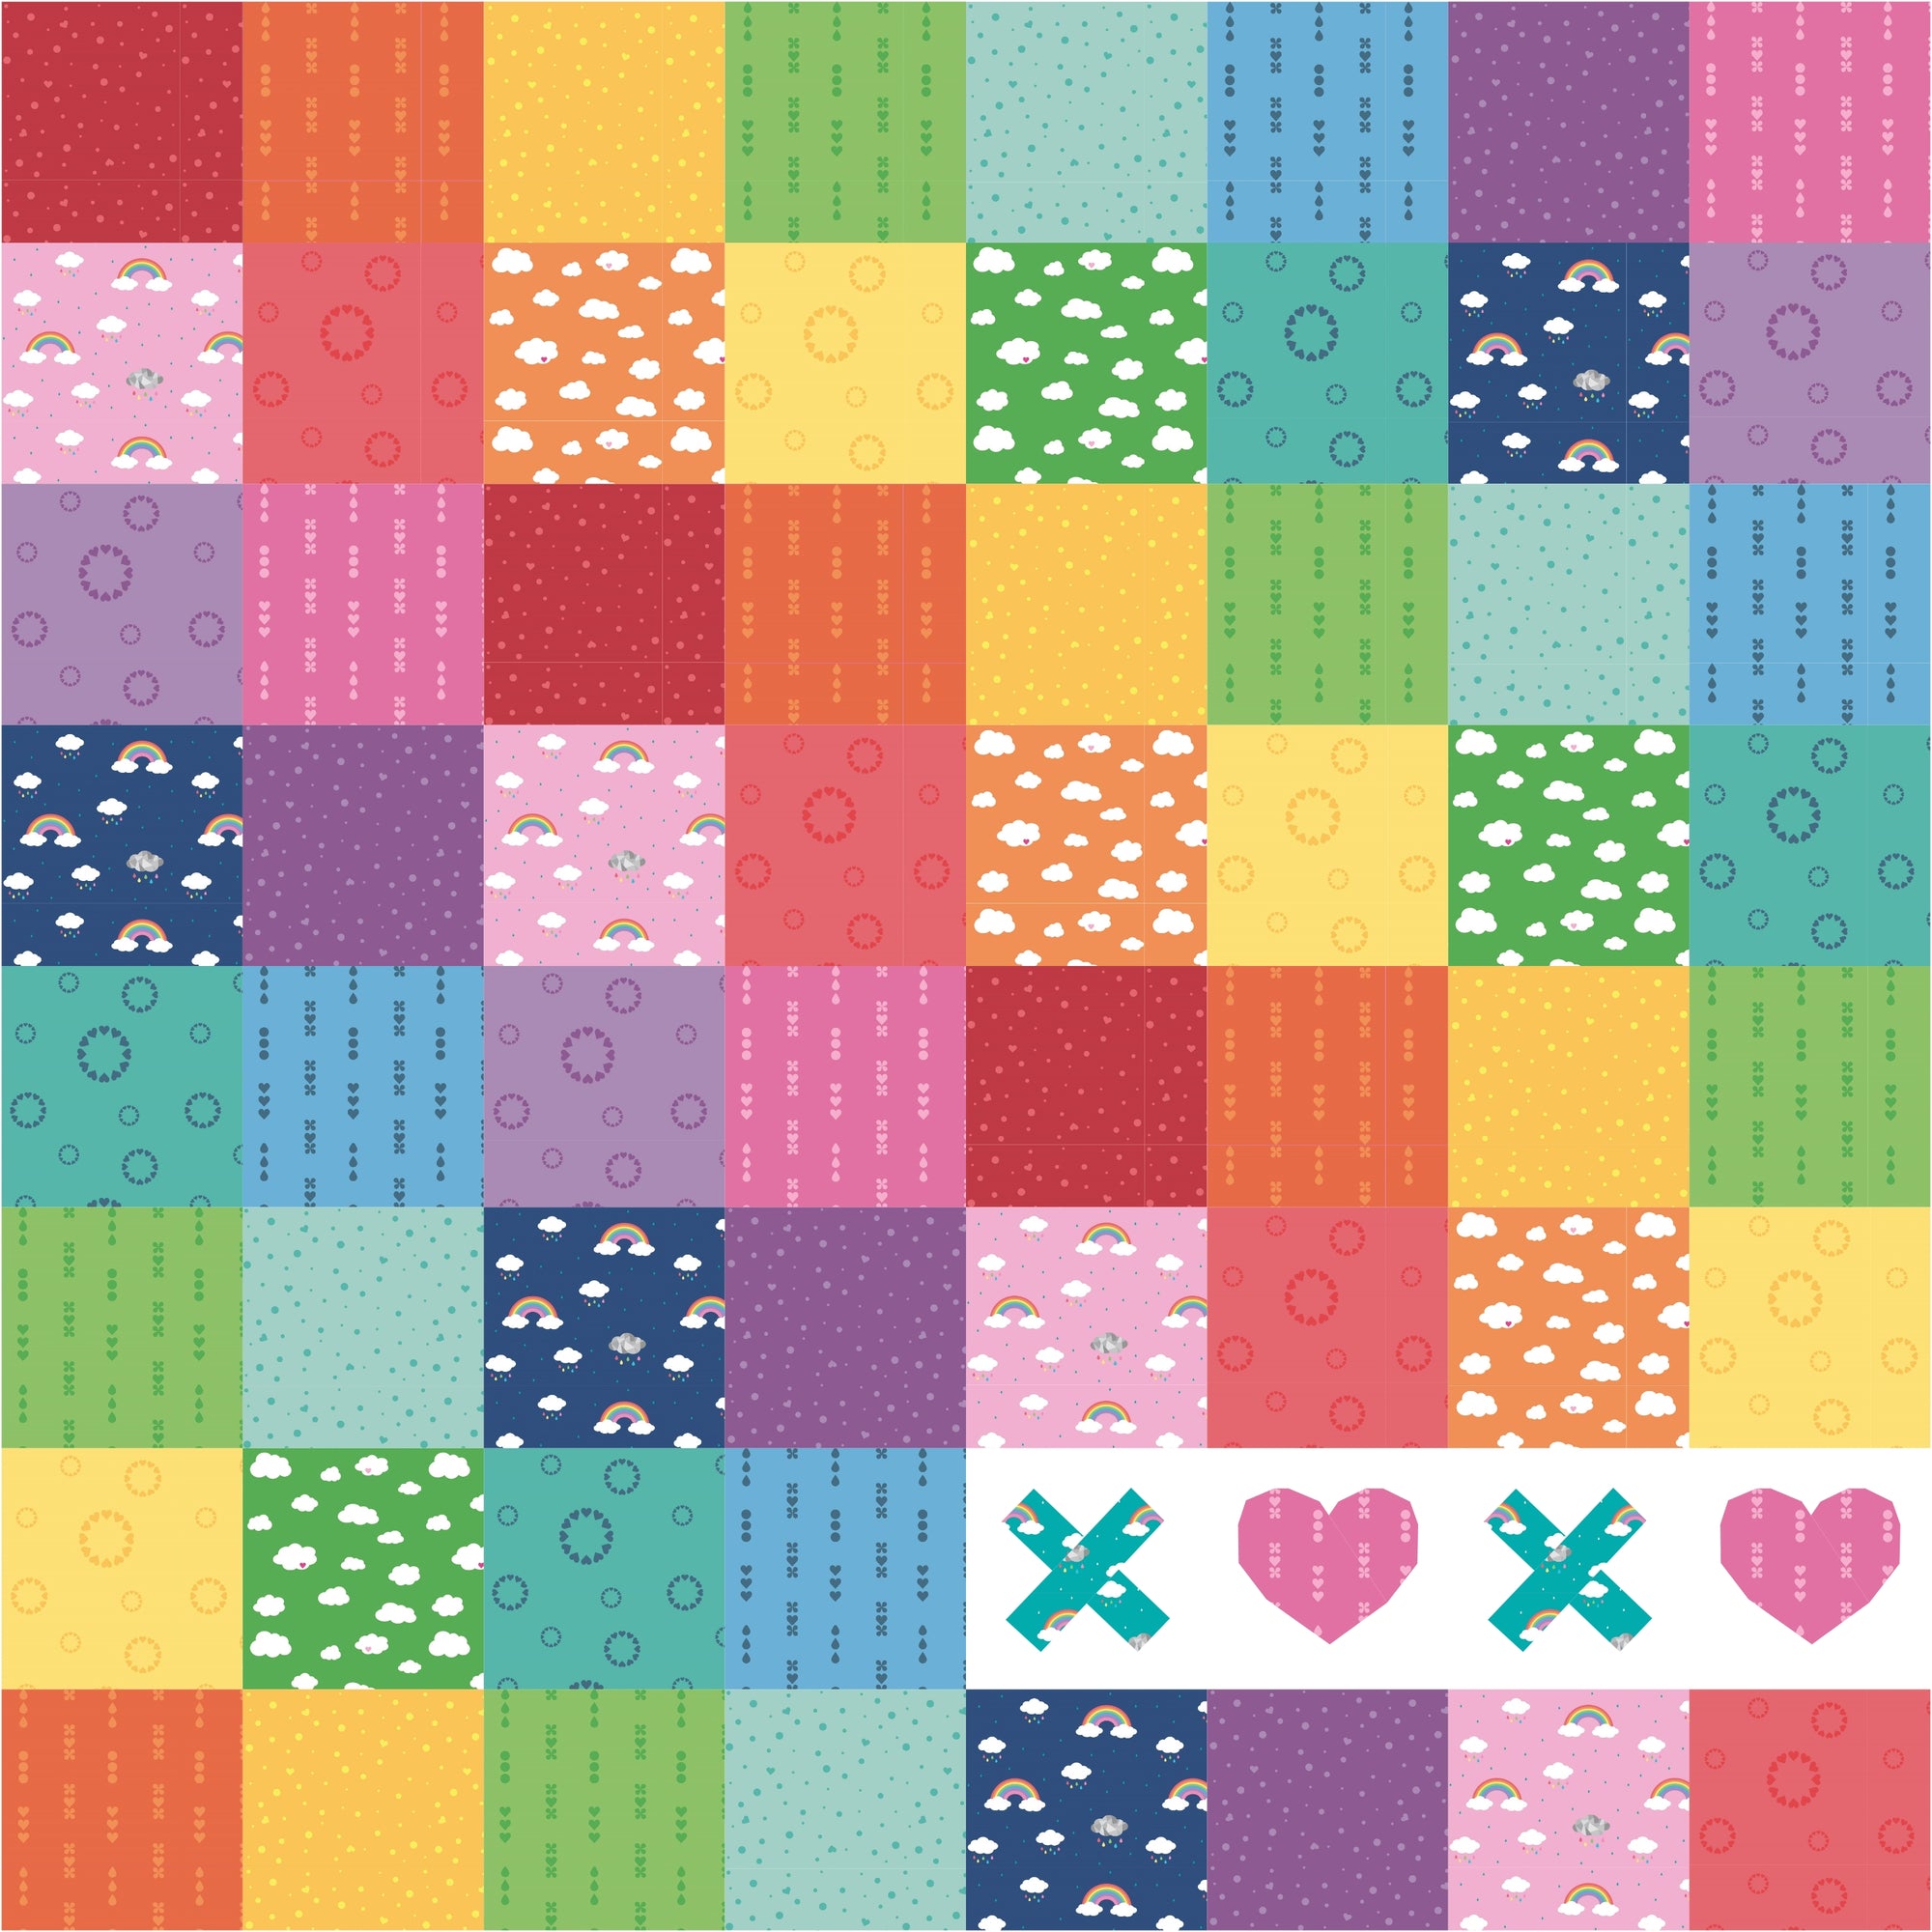 XOXO paper pieced quilt pattern in rainbow